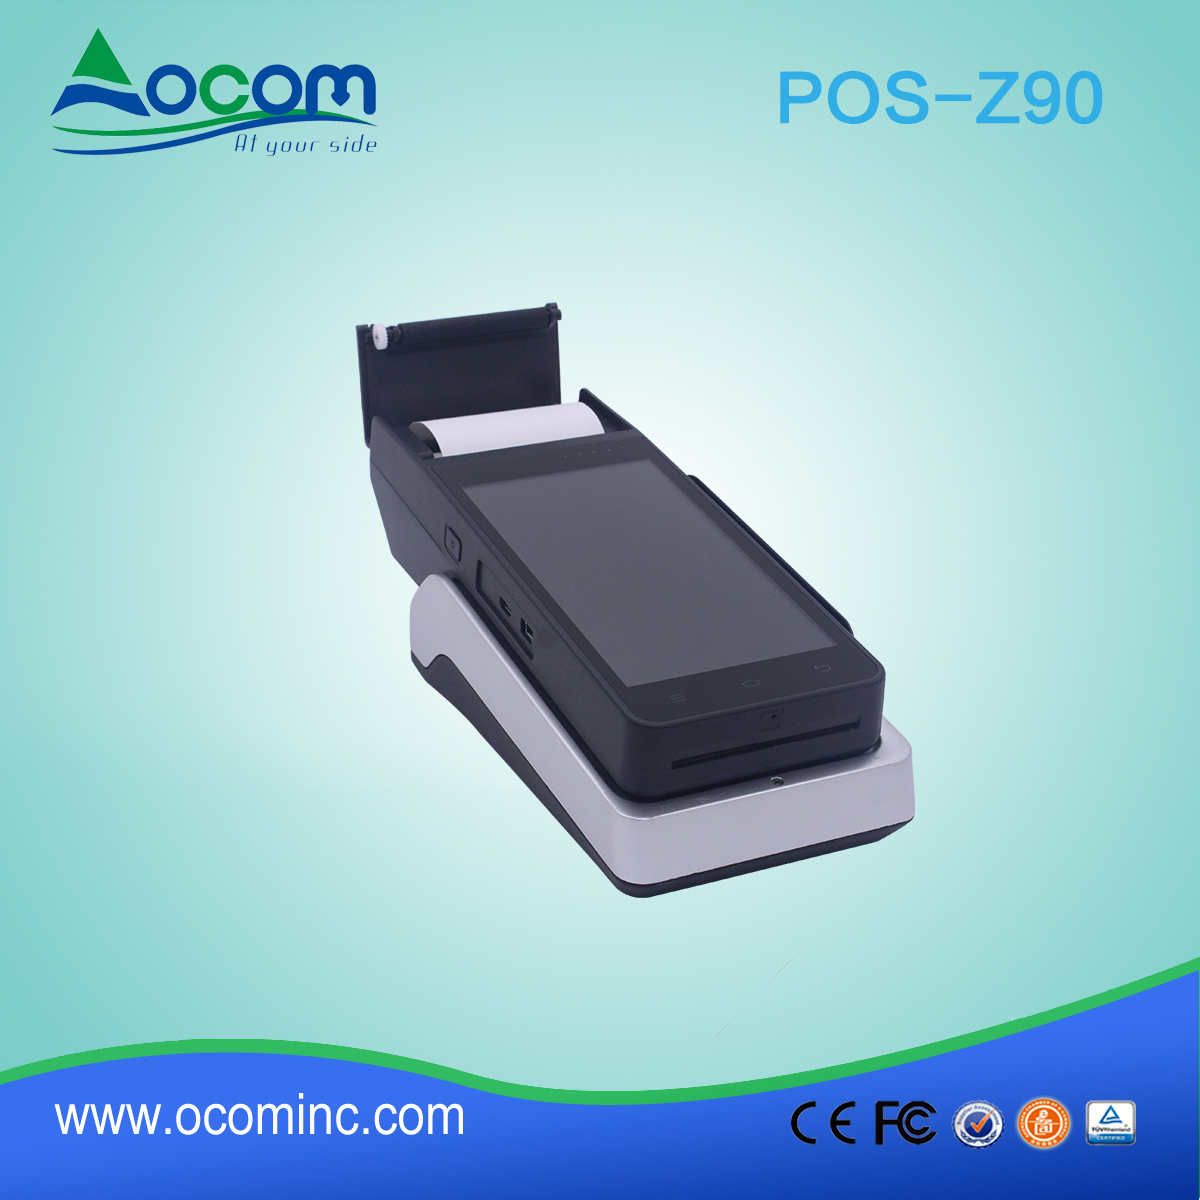 Z90 带打印机的移动触摸屏 pos 终端